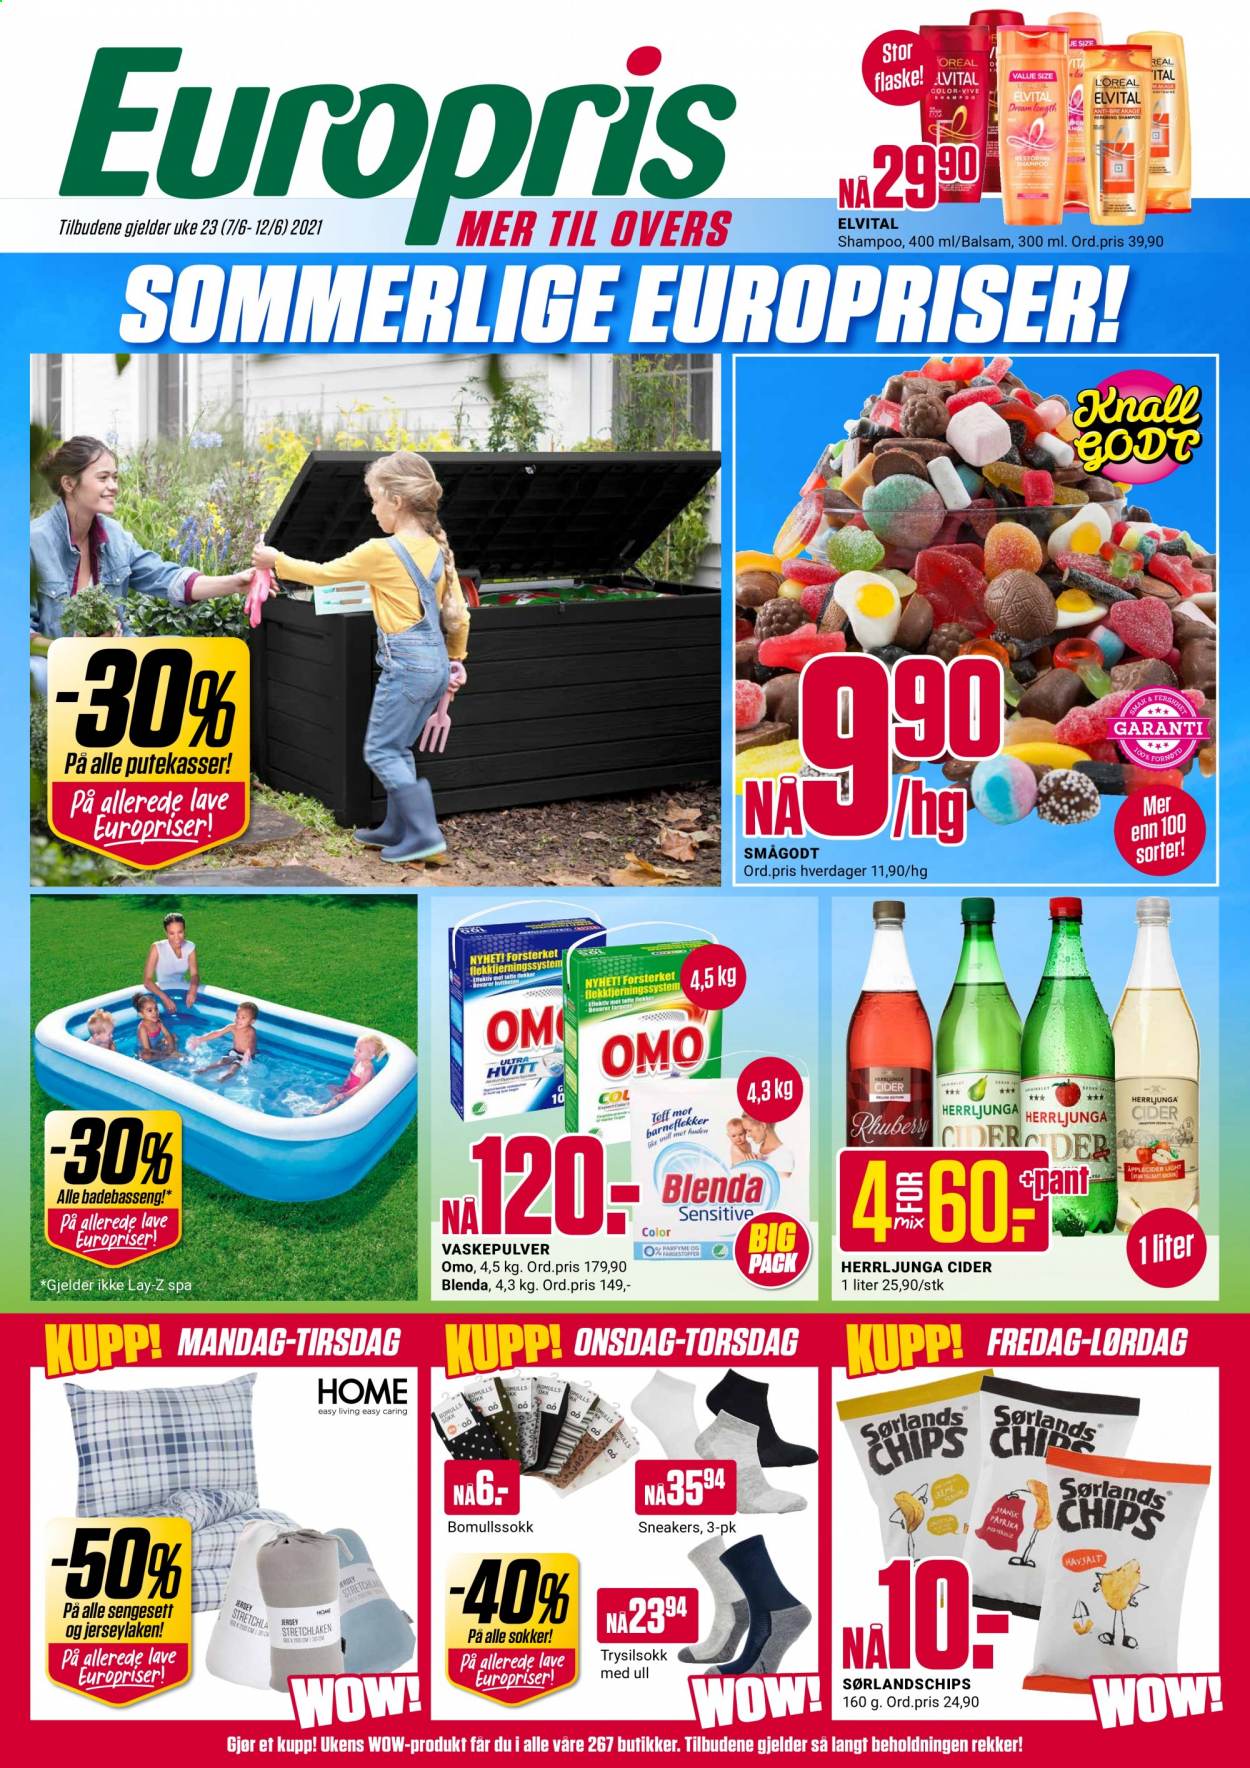 thumbnail - Kundeavis Europris - 7.6.2021 - 12.6.2021 - Produkter fra tilbudsaviser - L’Oréal, chips, cider, Omo, vaskepulver, Elvital, shampoo, sneakers. Side 1.